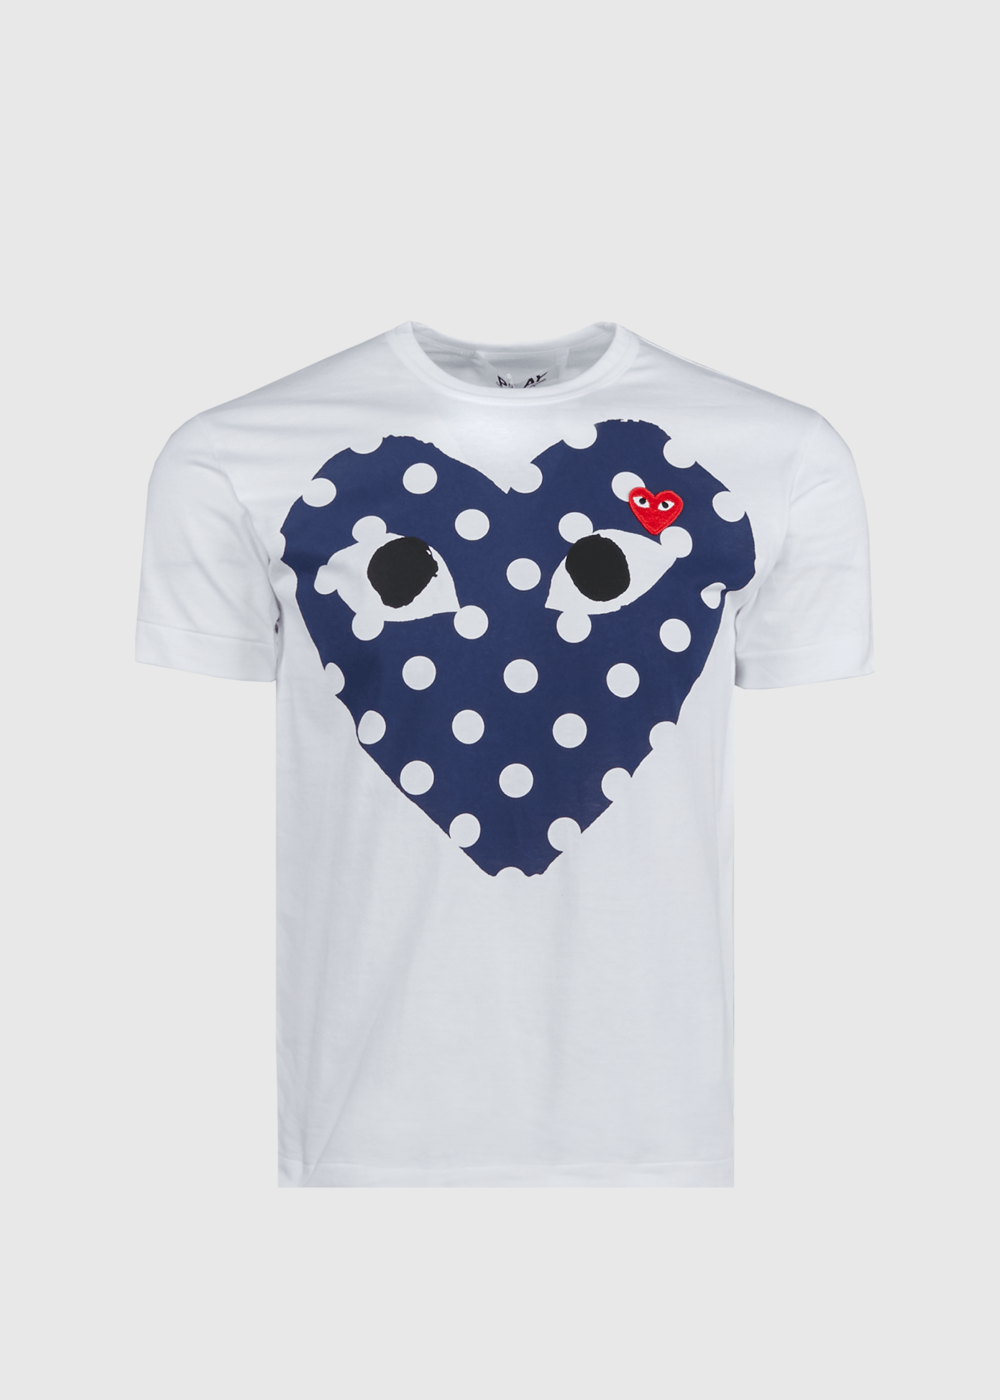 CDG Heart Logo - CDG Play: Dotted Heart Logo Tee [White/Navy] – Social Status